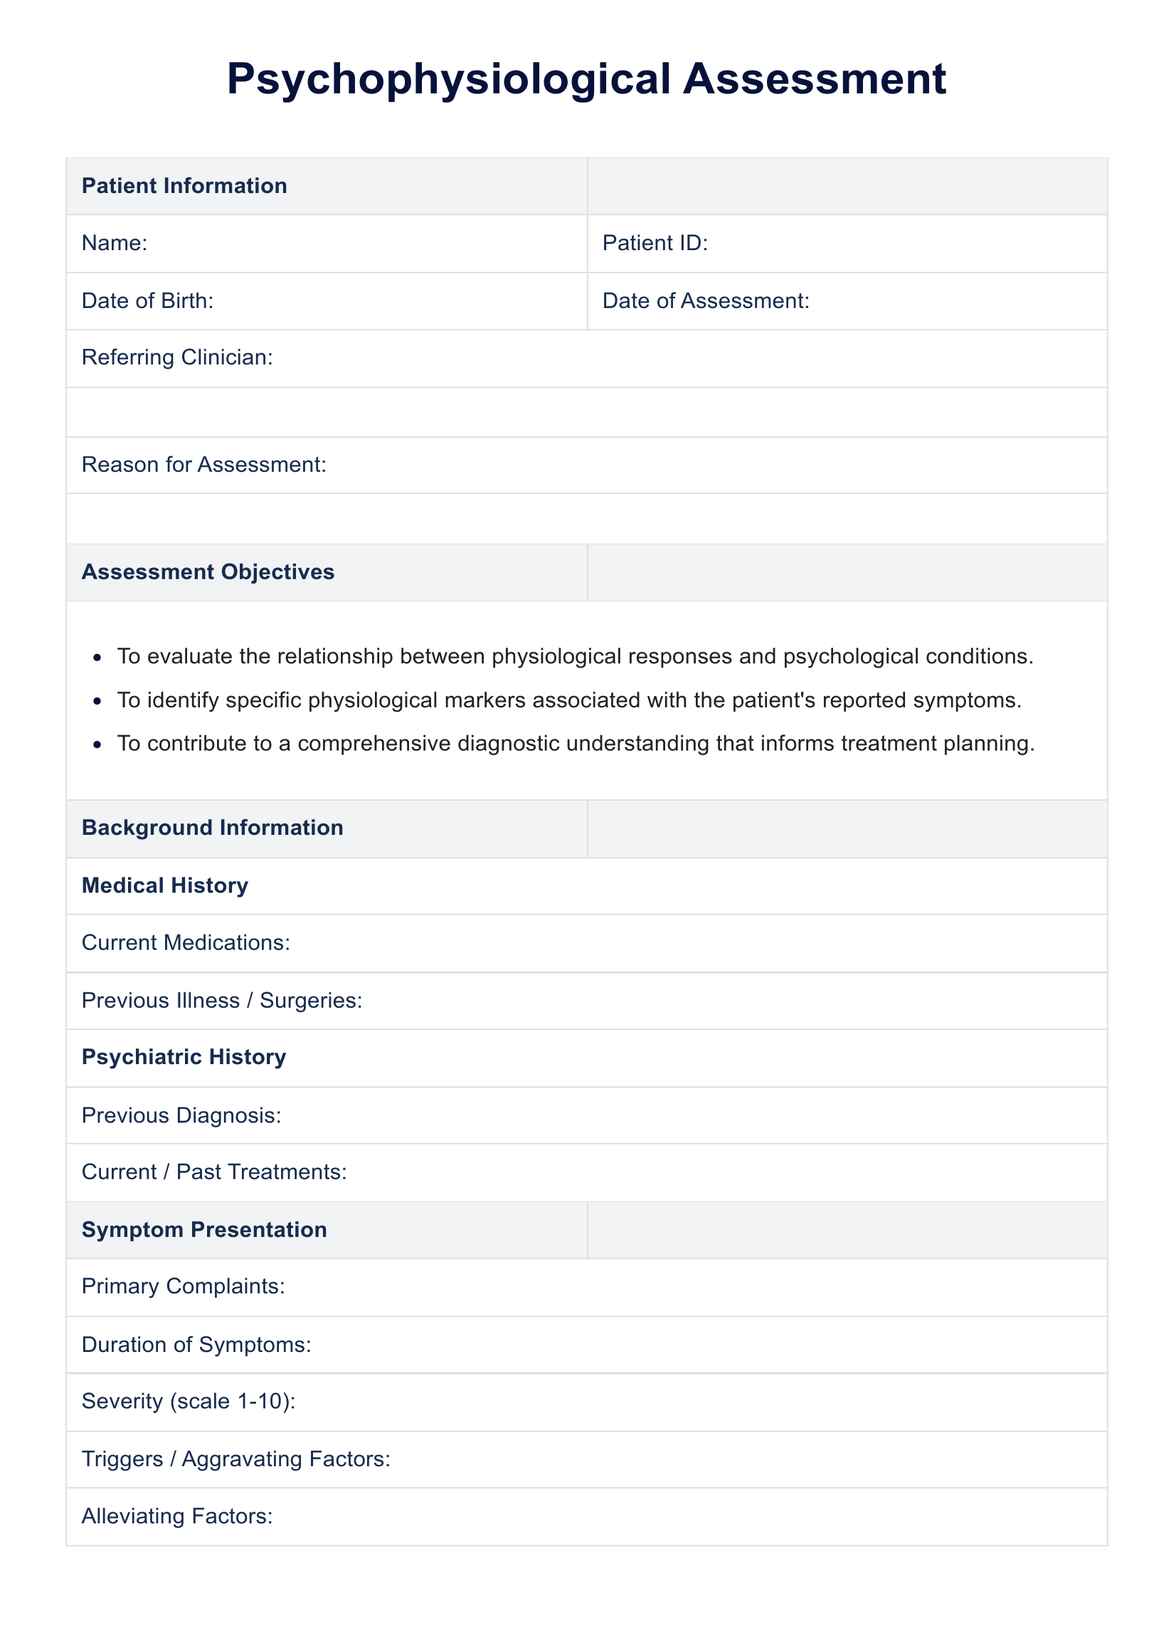 Psychophysiological Assessment PDF Example